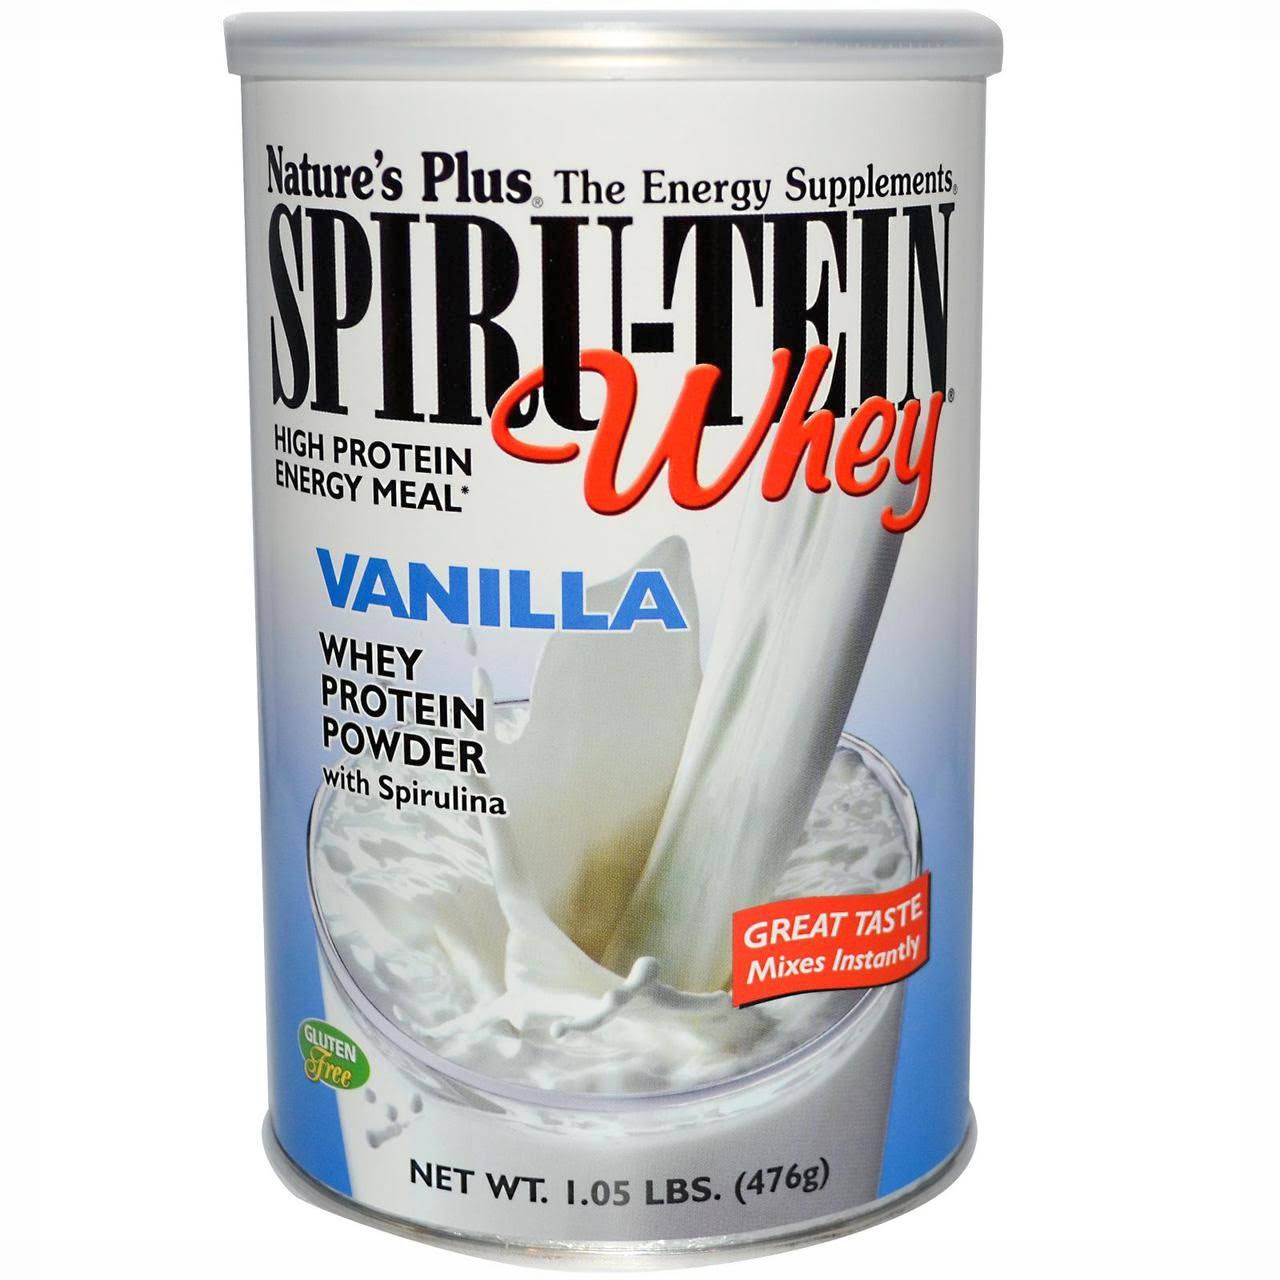 Nature's Plus Spiru-tein High Protein Energy Meal Whey - Vanilla